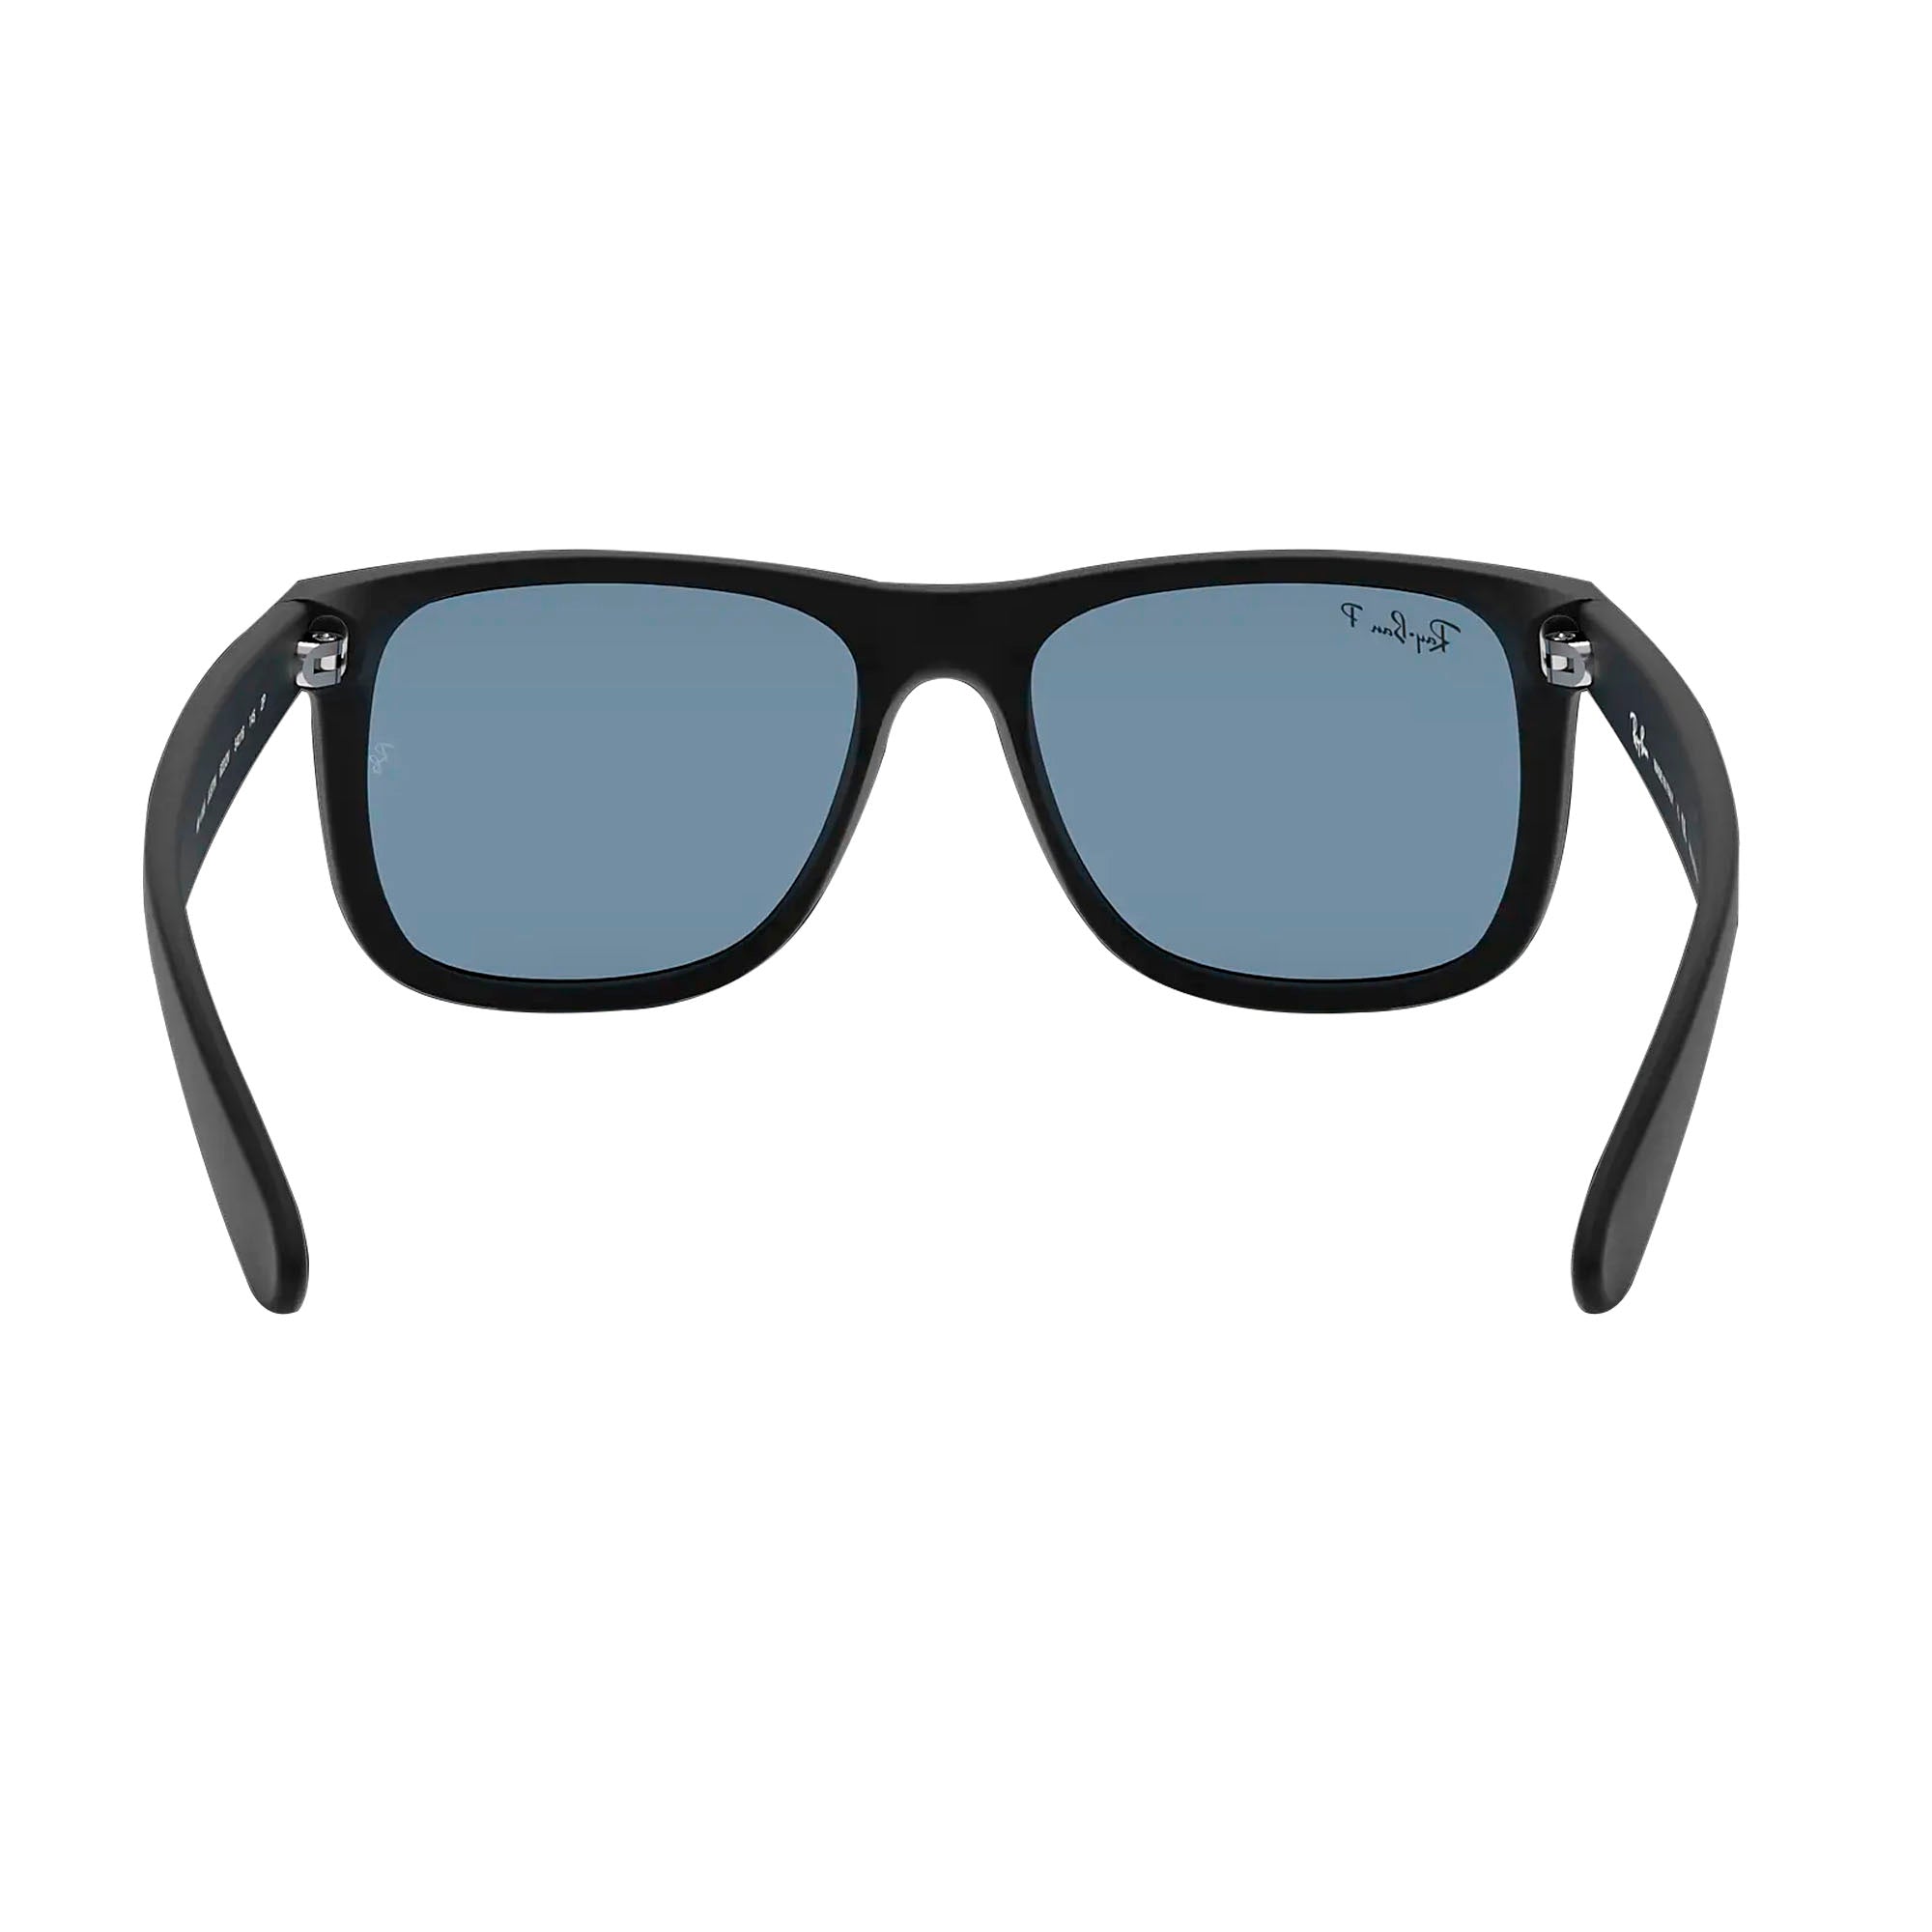 Ray-Ban RB4165-622/2V Justin Classic Sunglasses Black Frame Polarized Blue Classic Lens